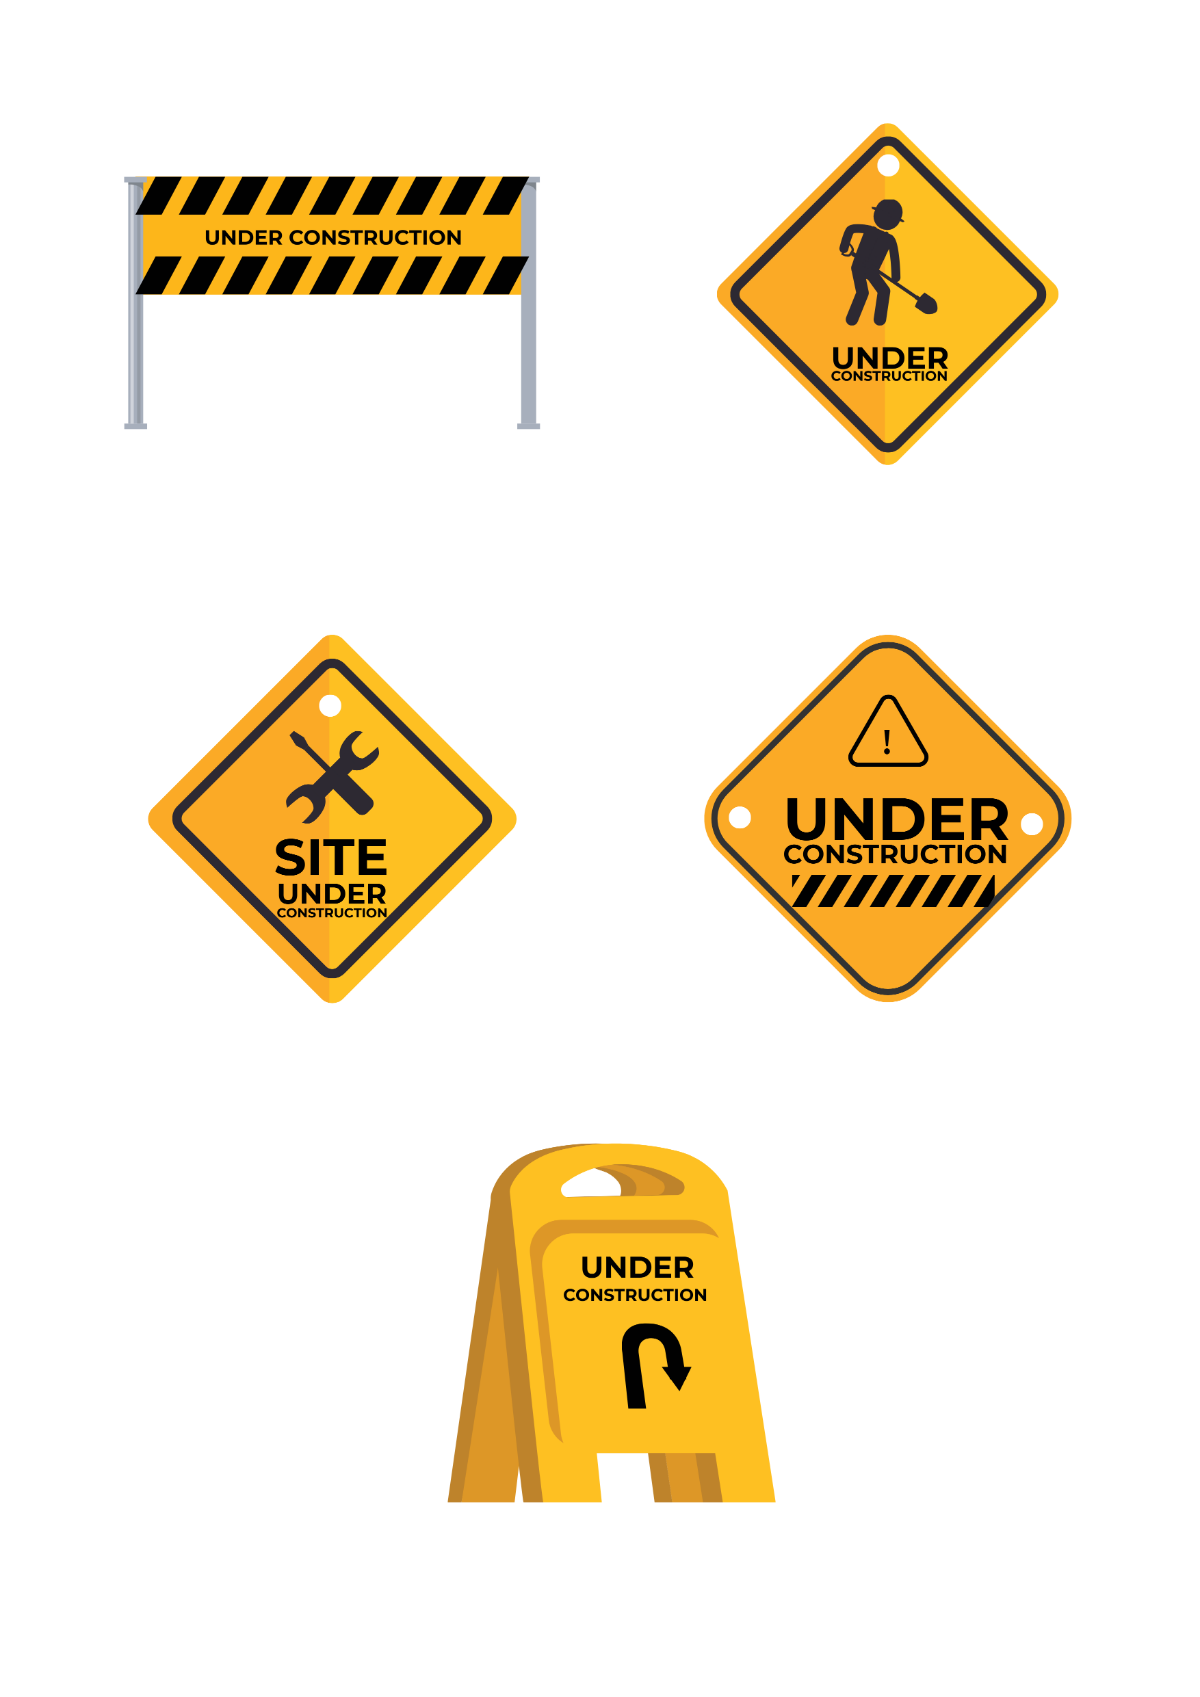 Construction Warning Signs Vector